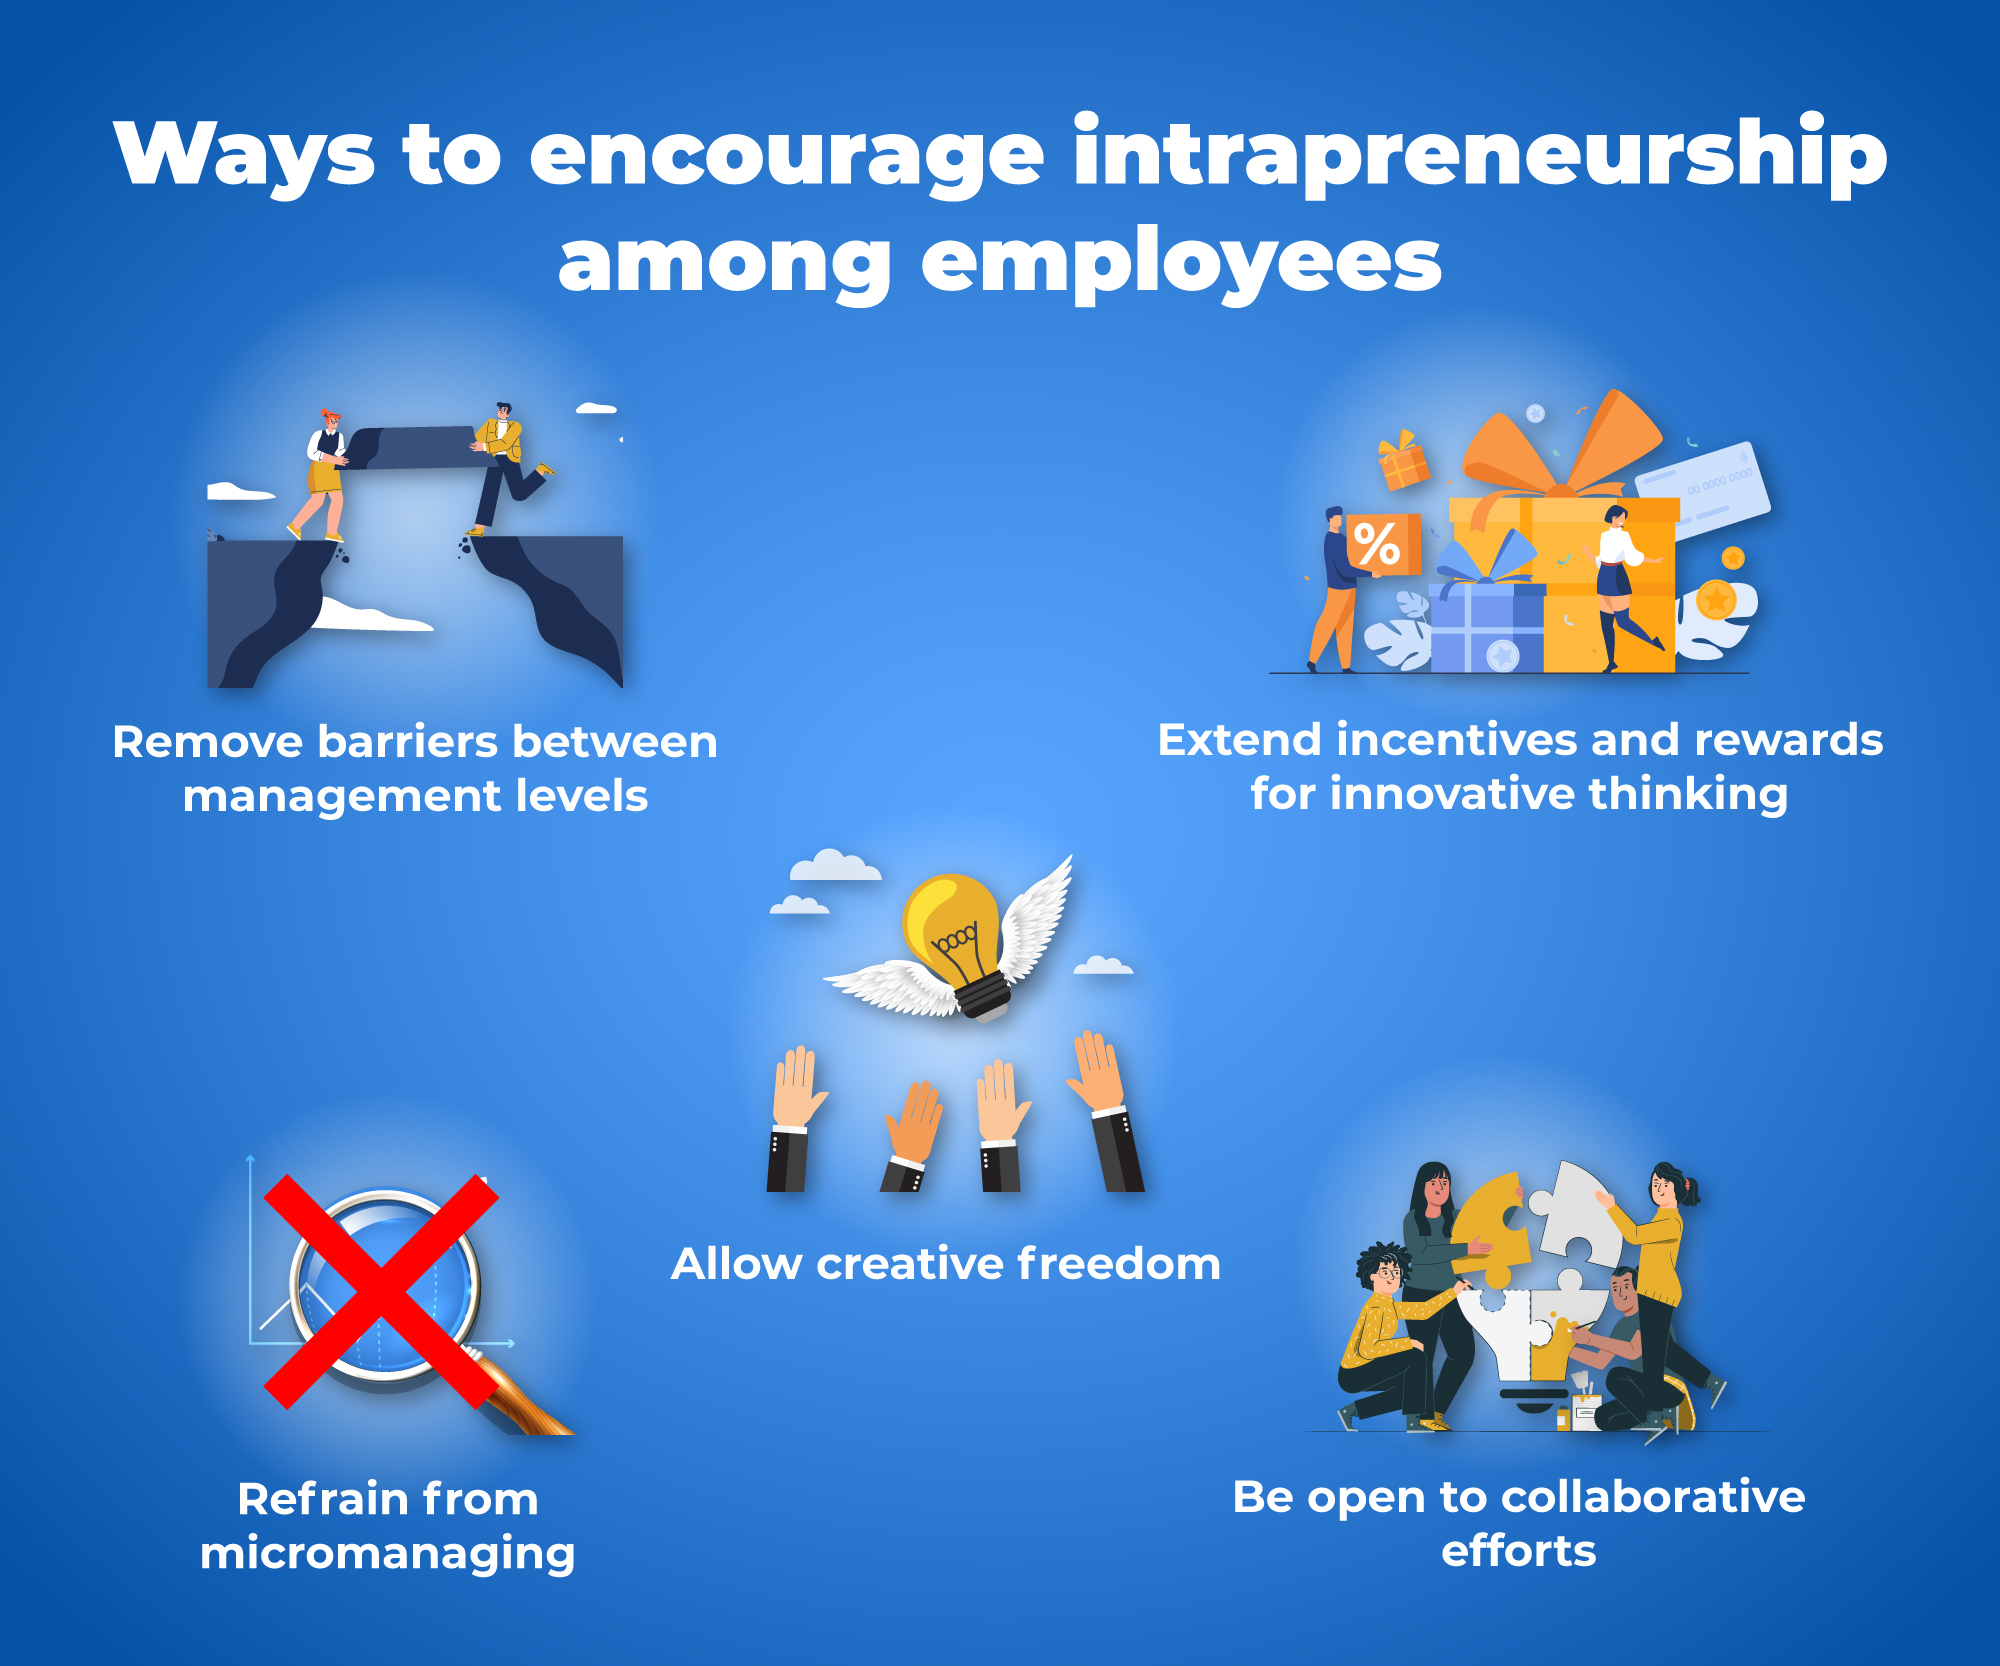 Ways to encourage intrapreneurship among employees